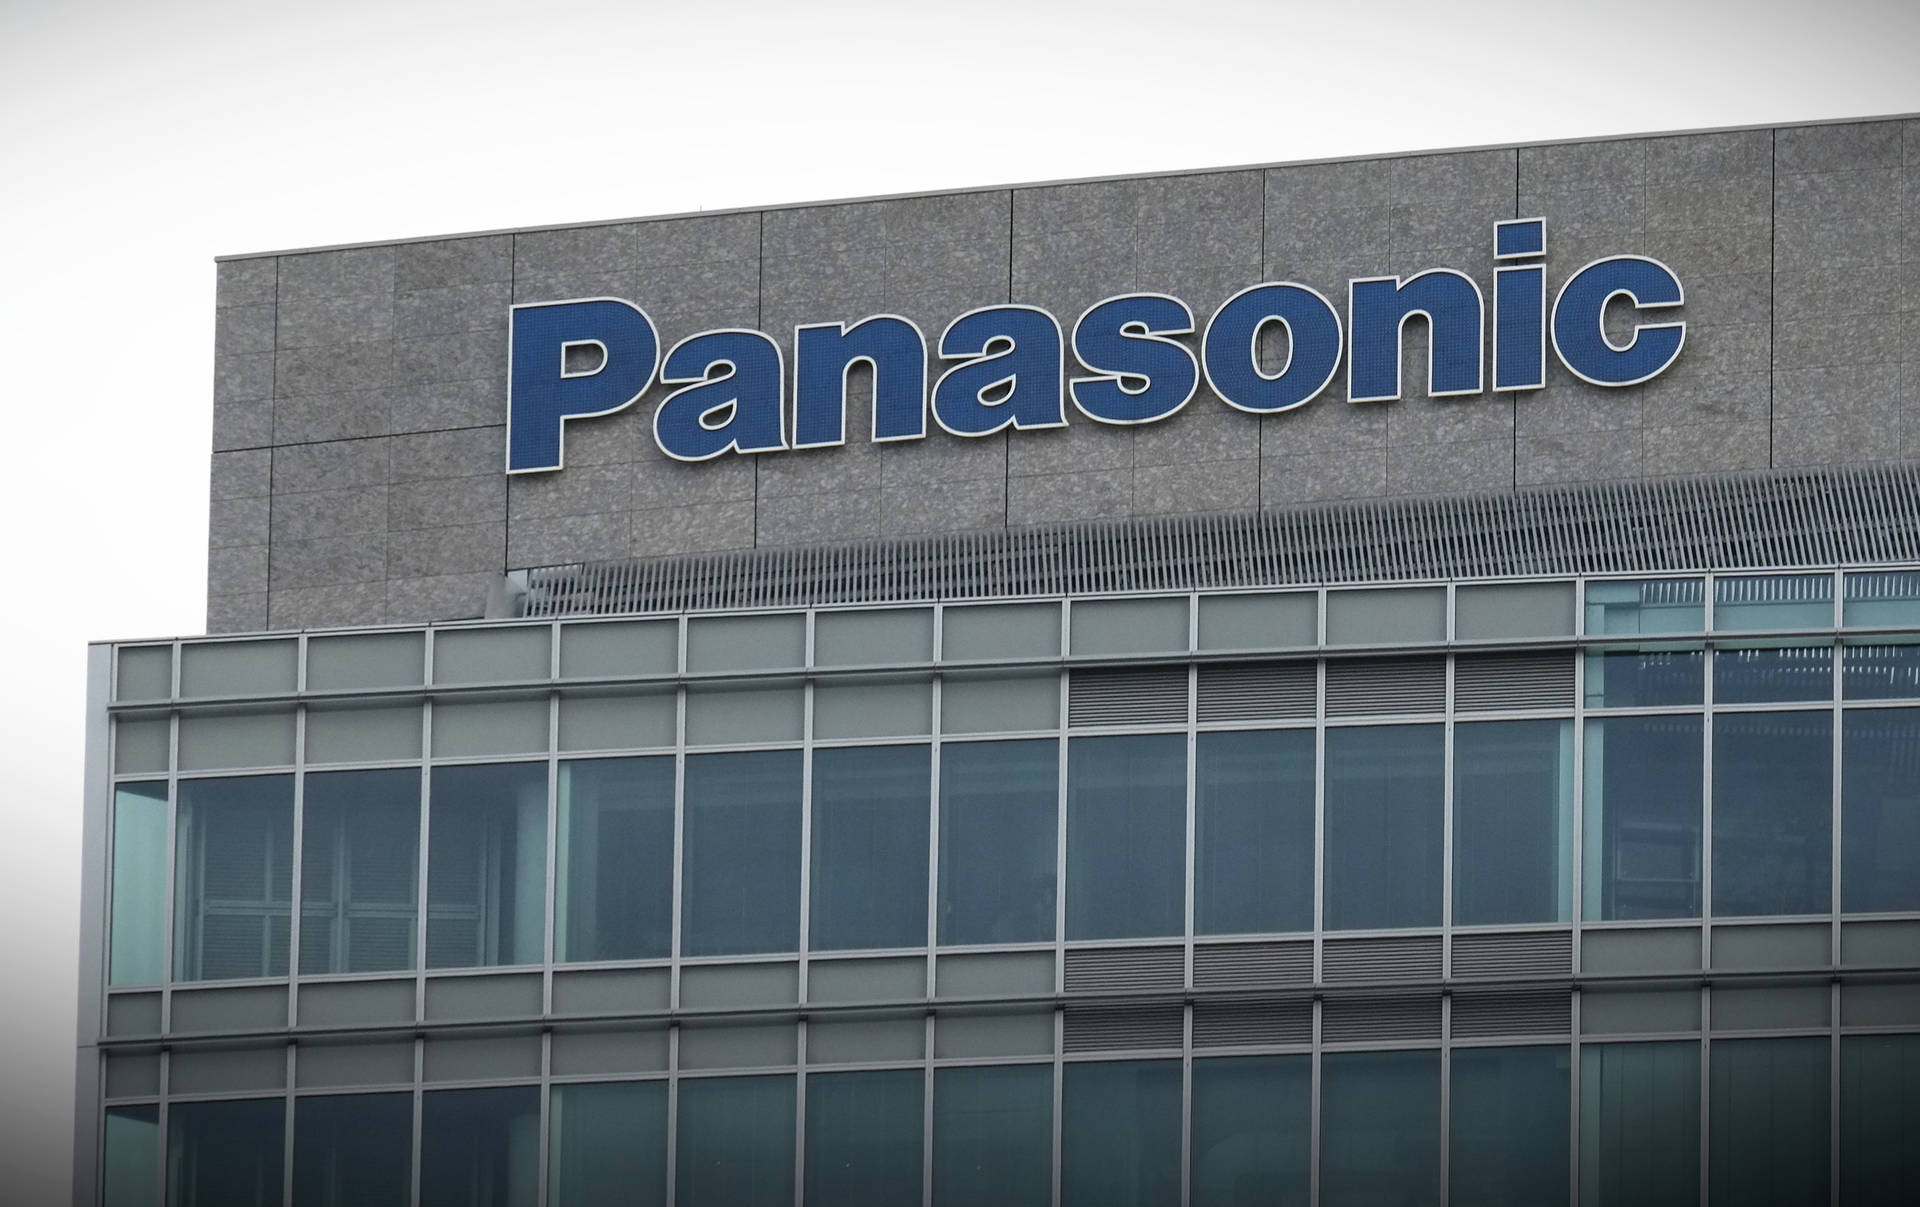 Panasonic Grey Building Wallpaper